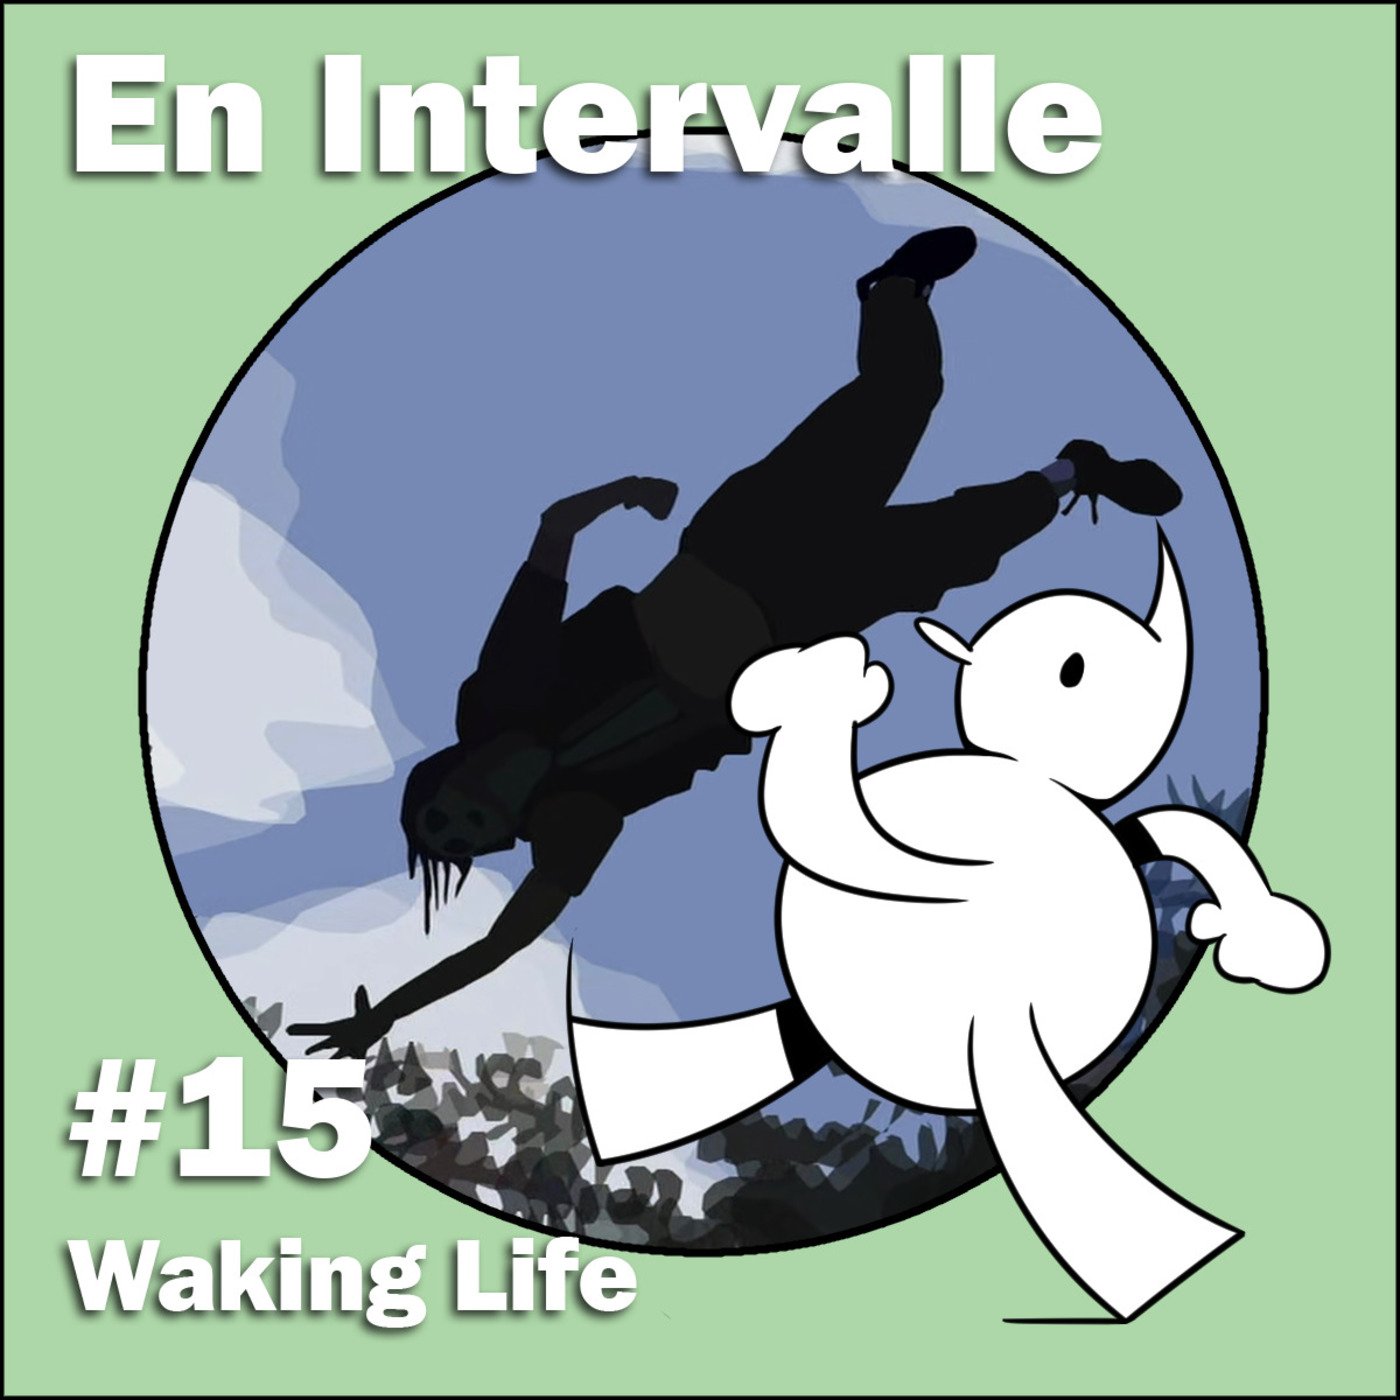 Waking Life (En Intervalle #15)